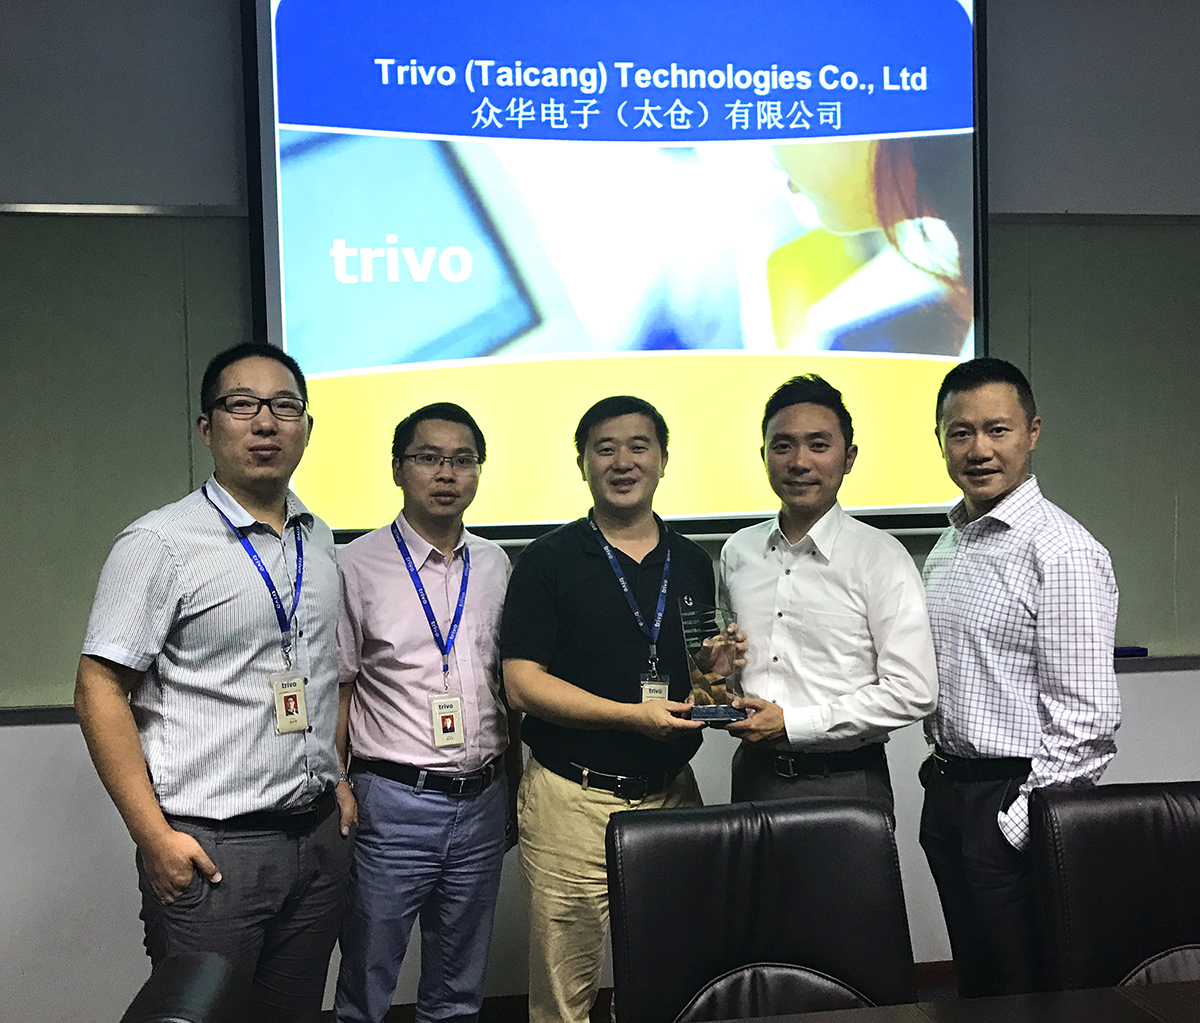 Digi-Key Electronics receiving the award from Trivo